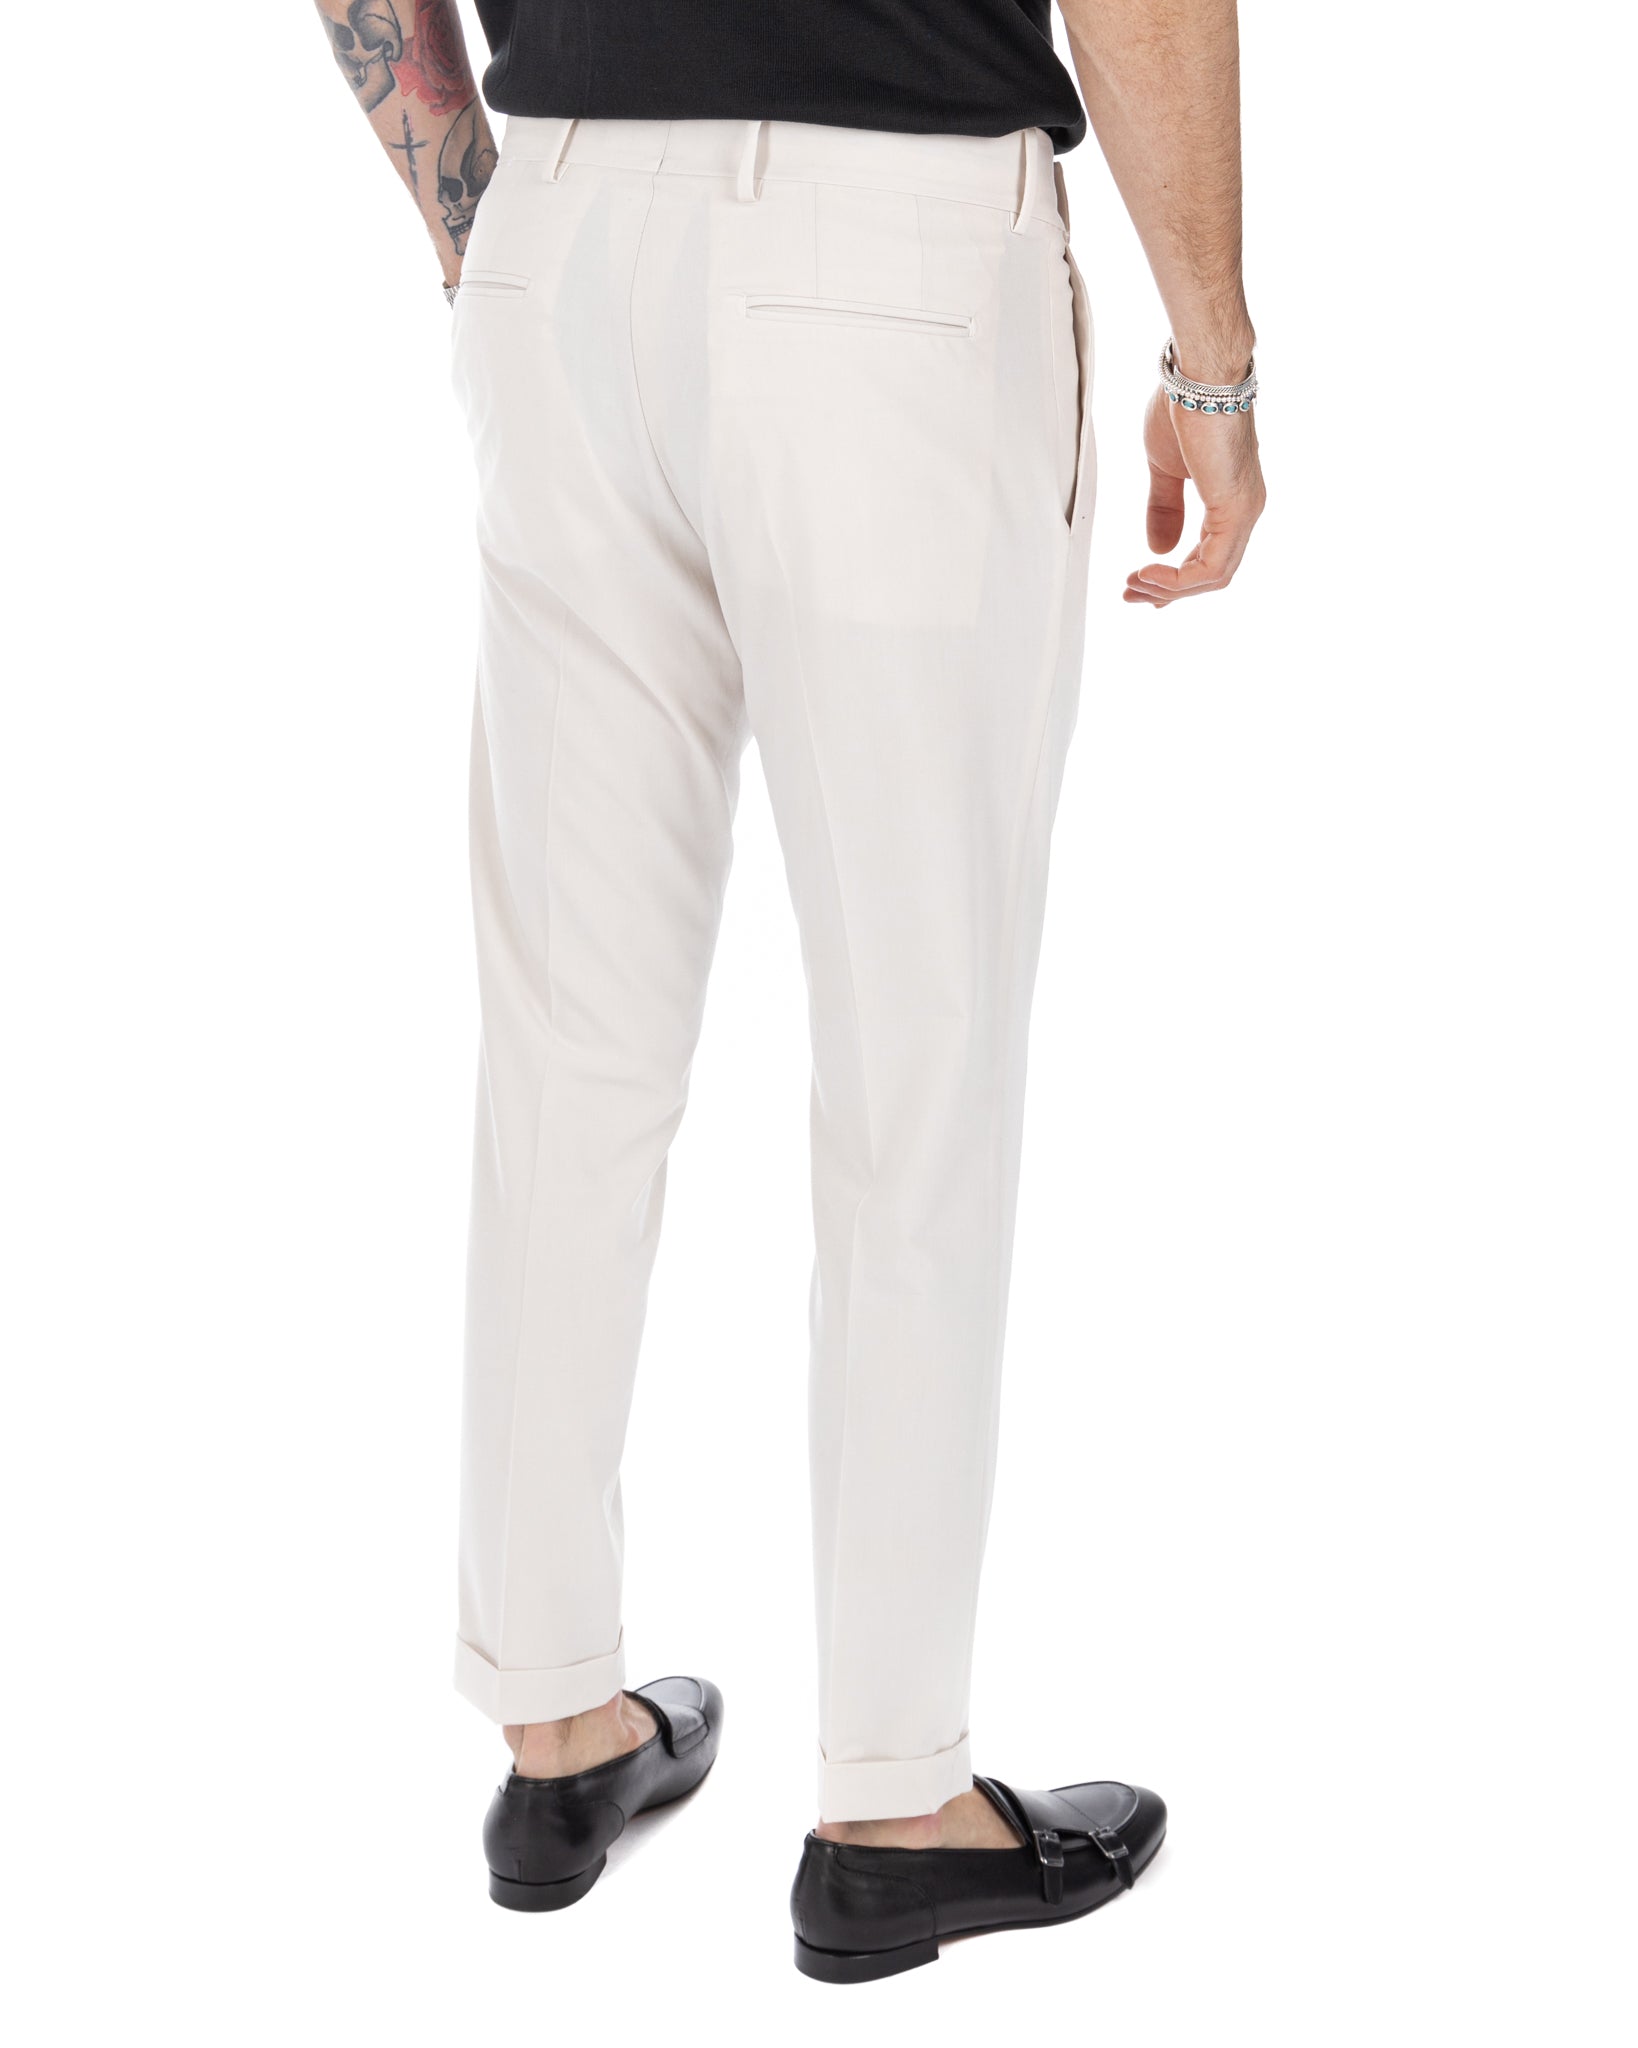 Caprera - cream high waisted trousers